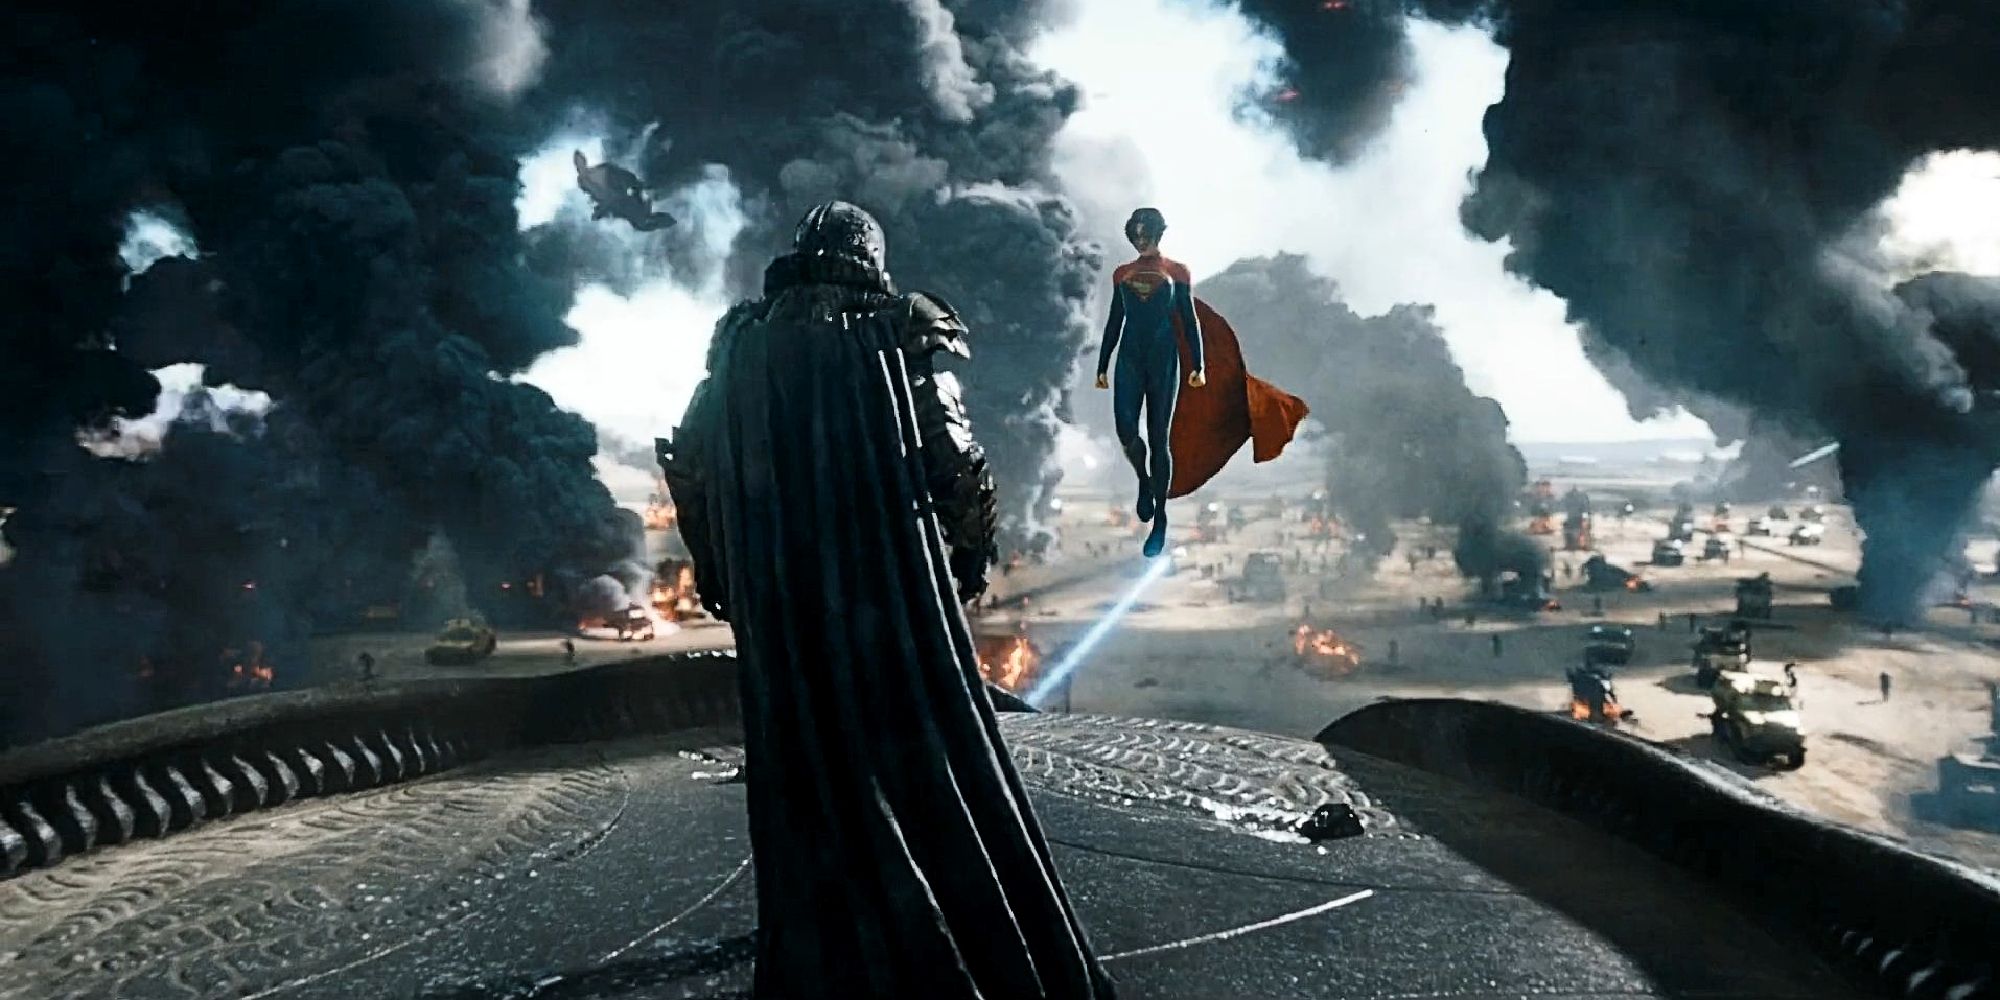 Supergirl vs General Zod in The Flash